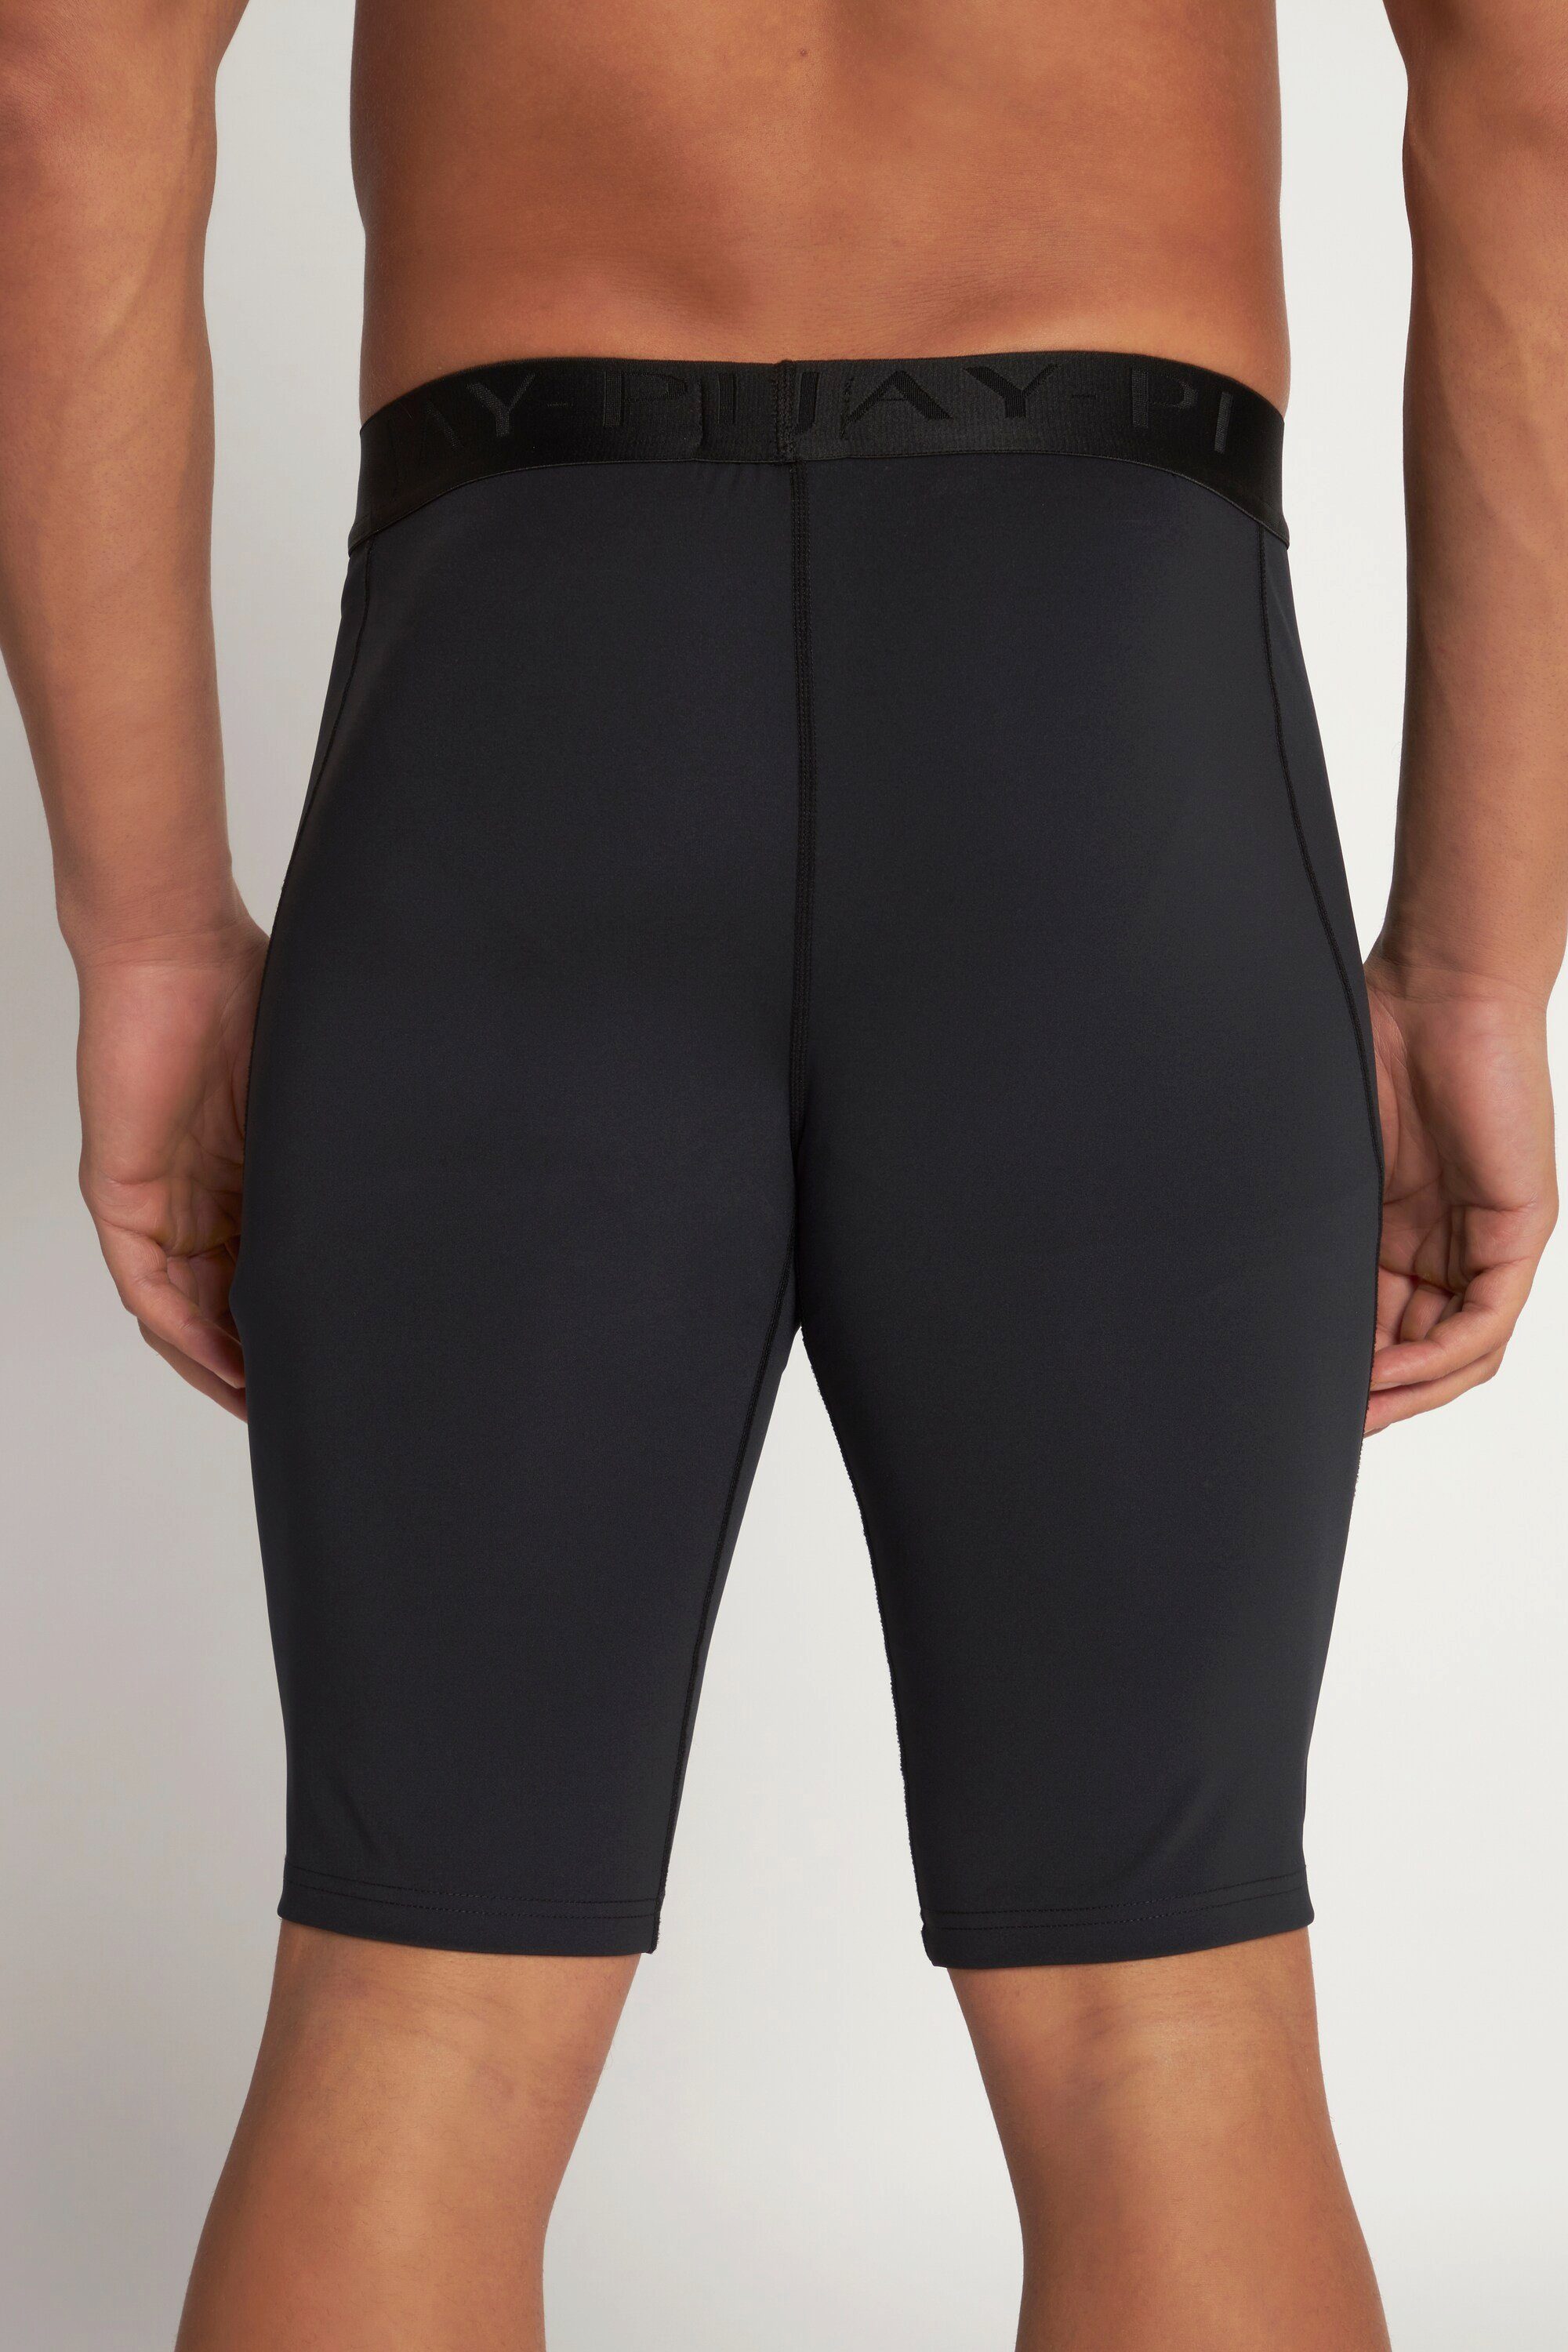 Unterhose Fitness schwarz JP1880 Longpants Boxershorts